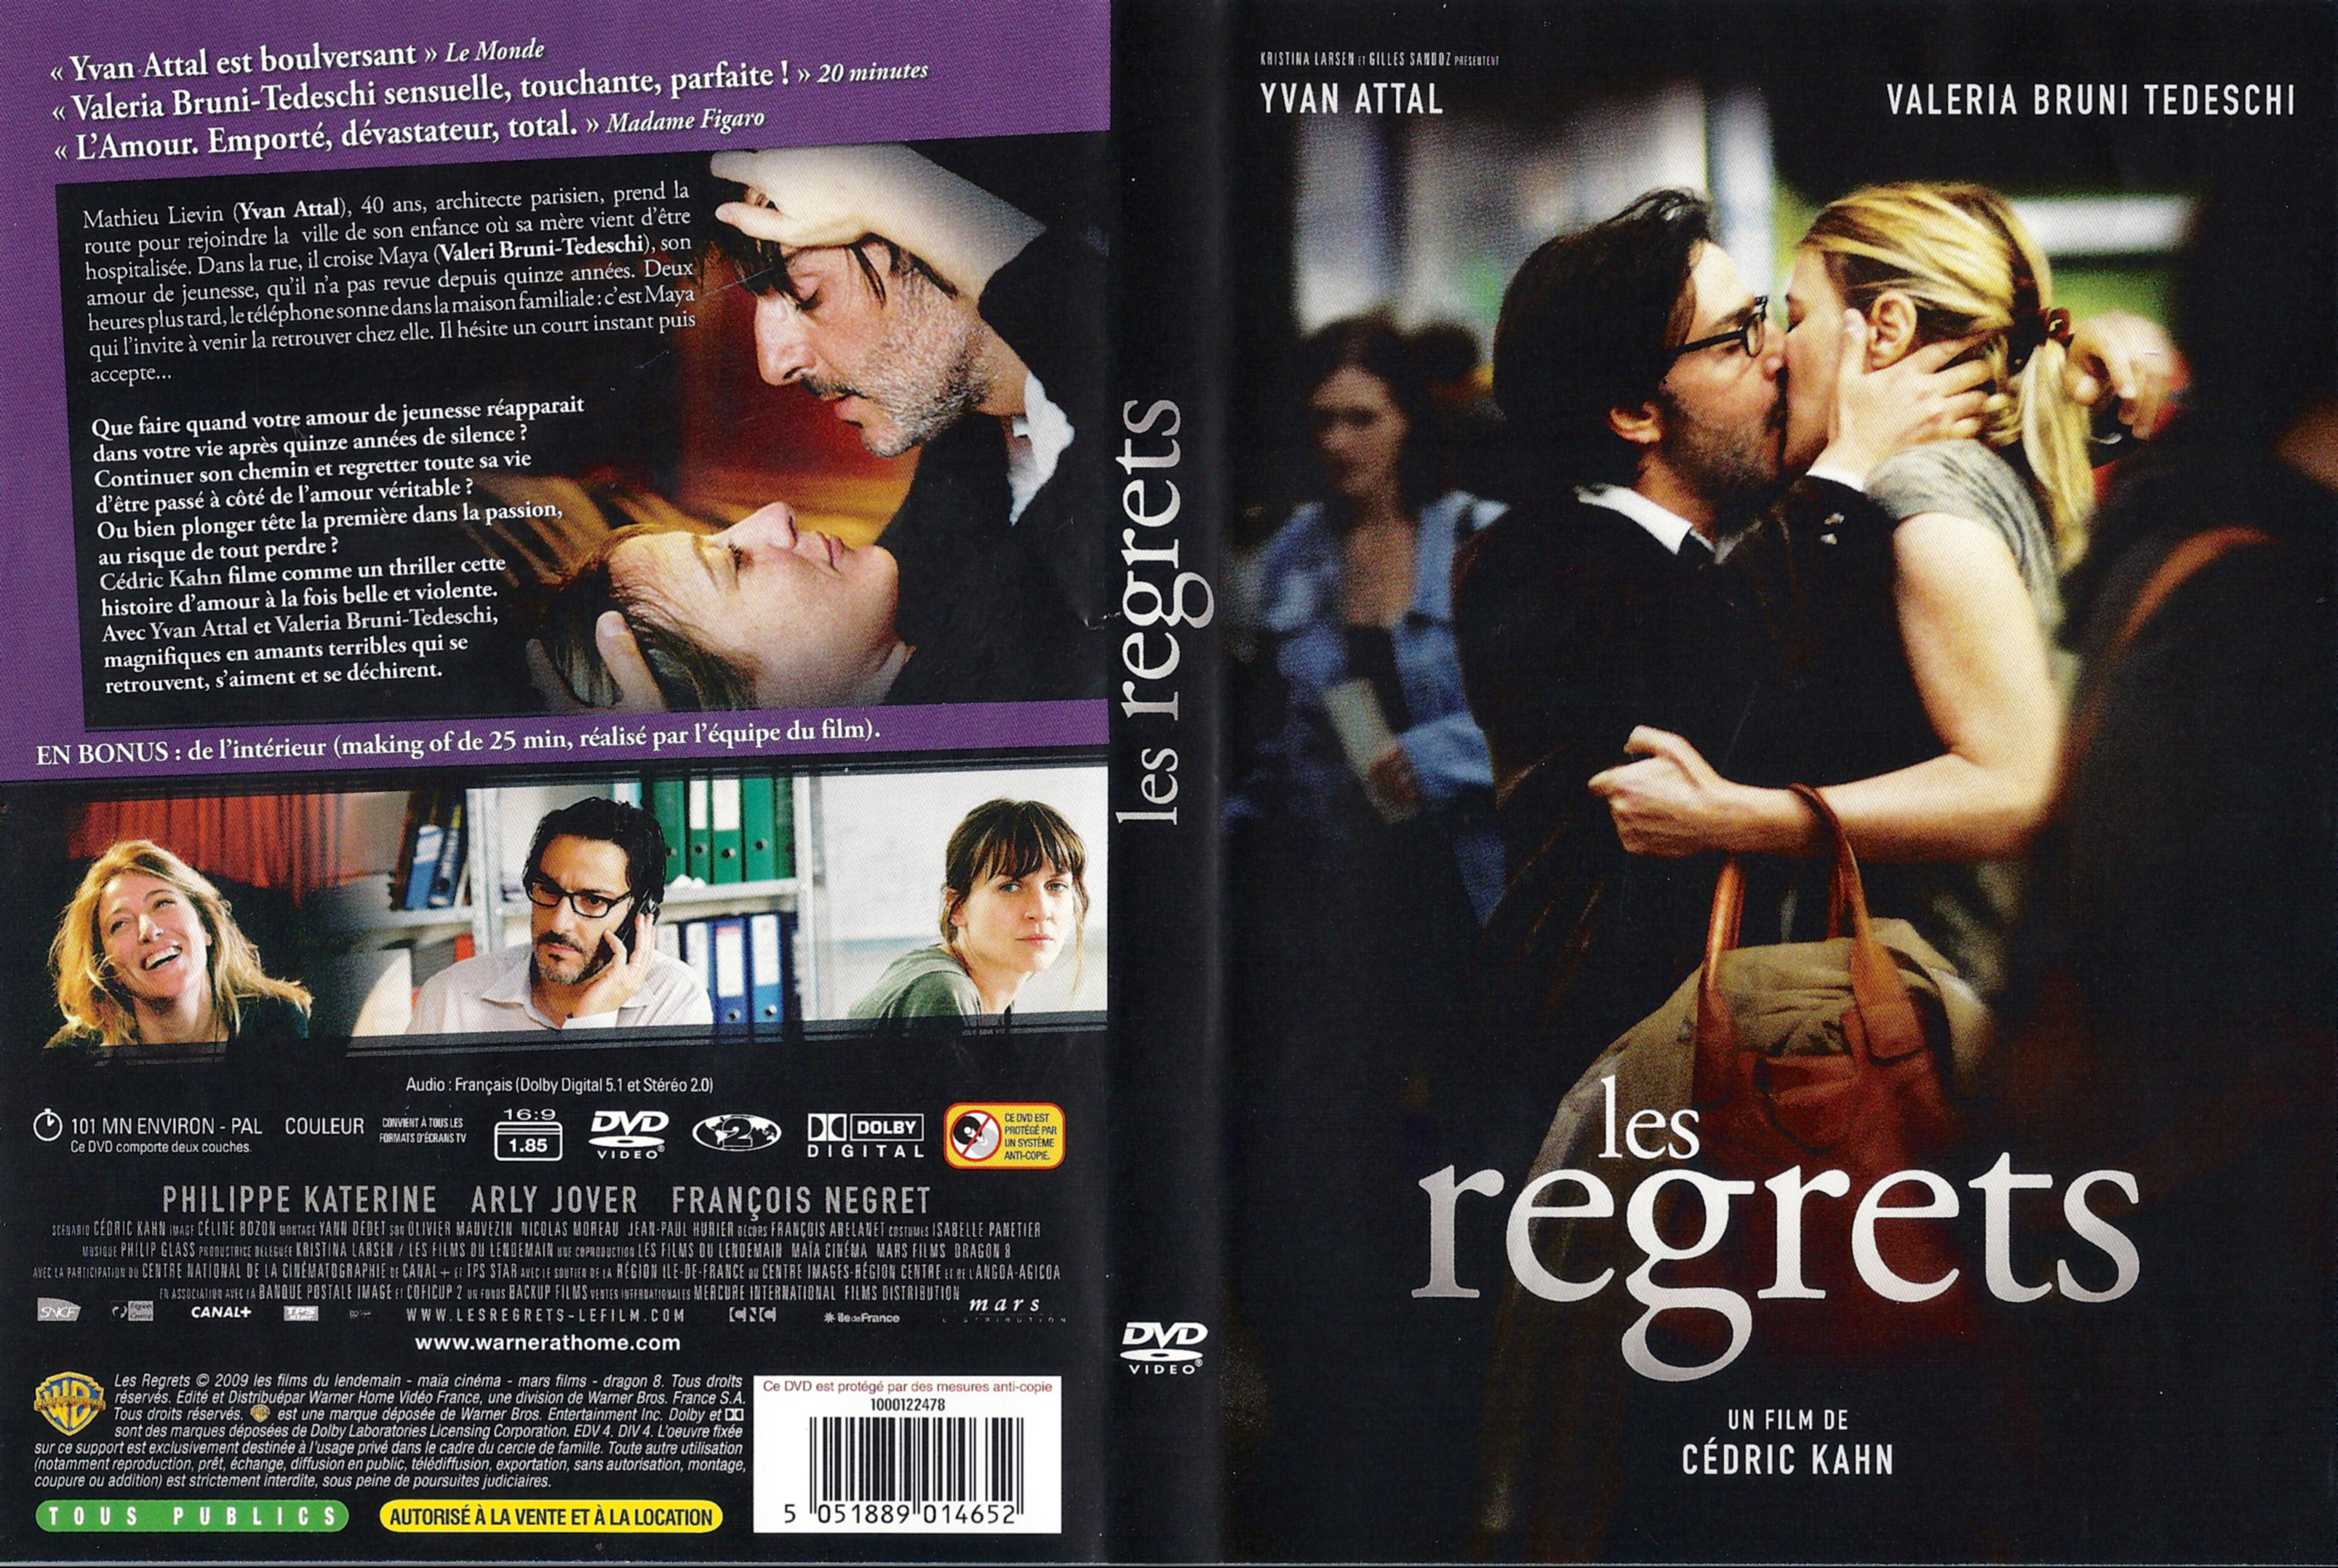 Jaquette DVD Les regrets